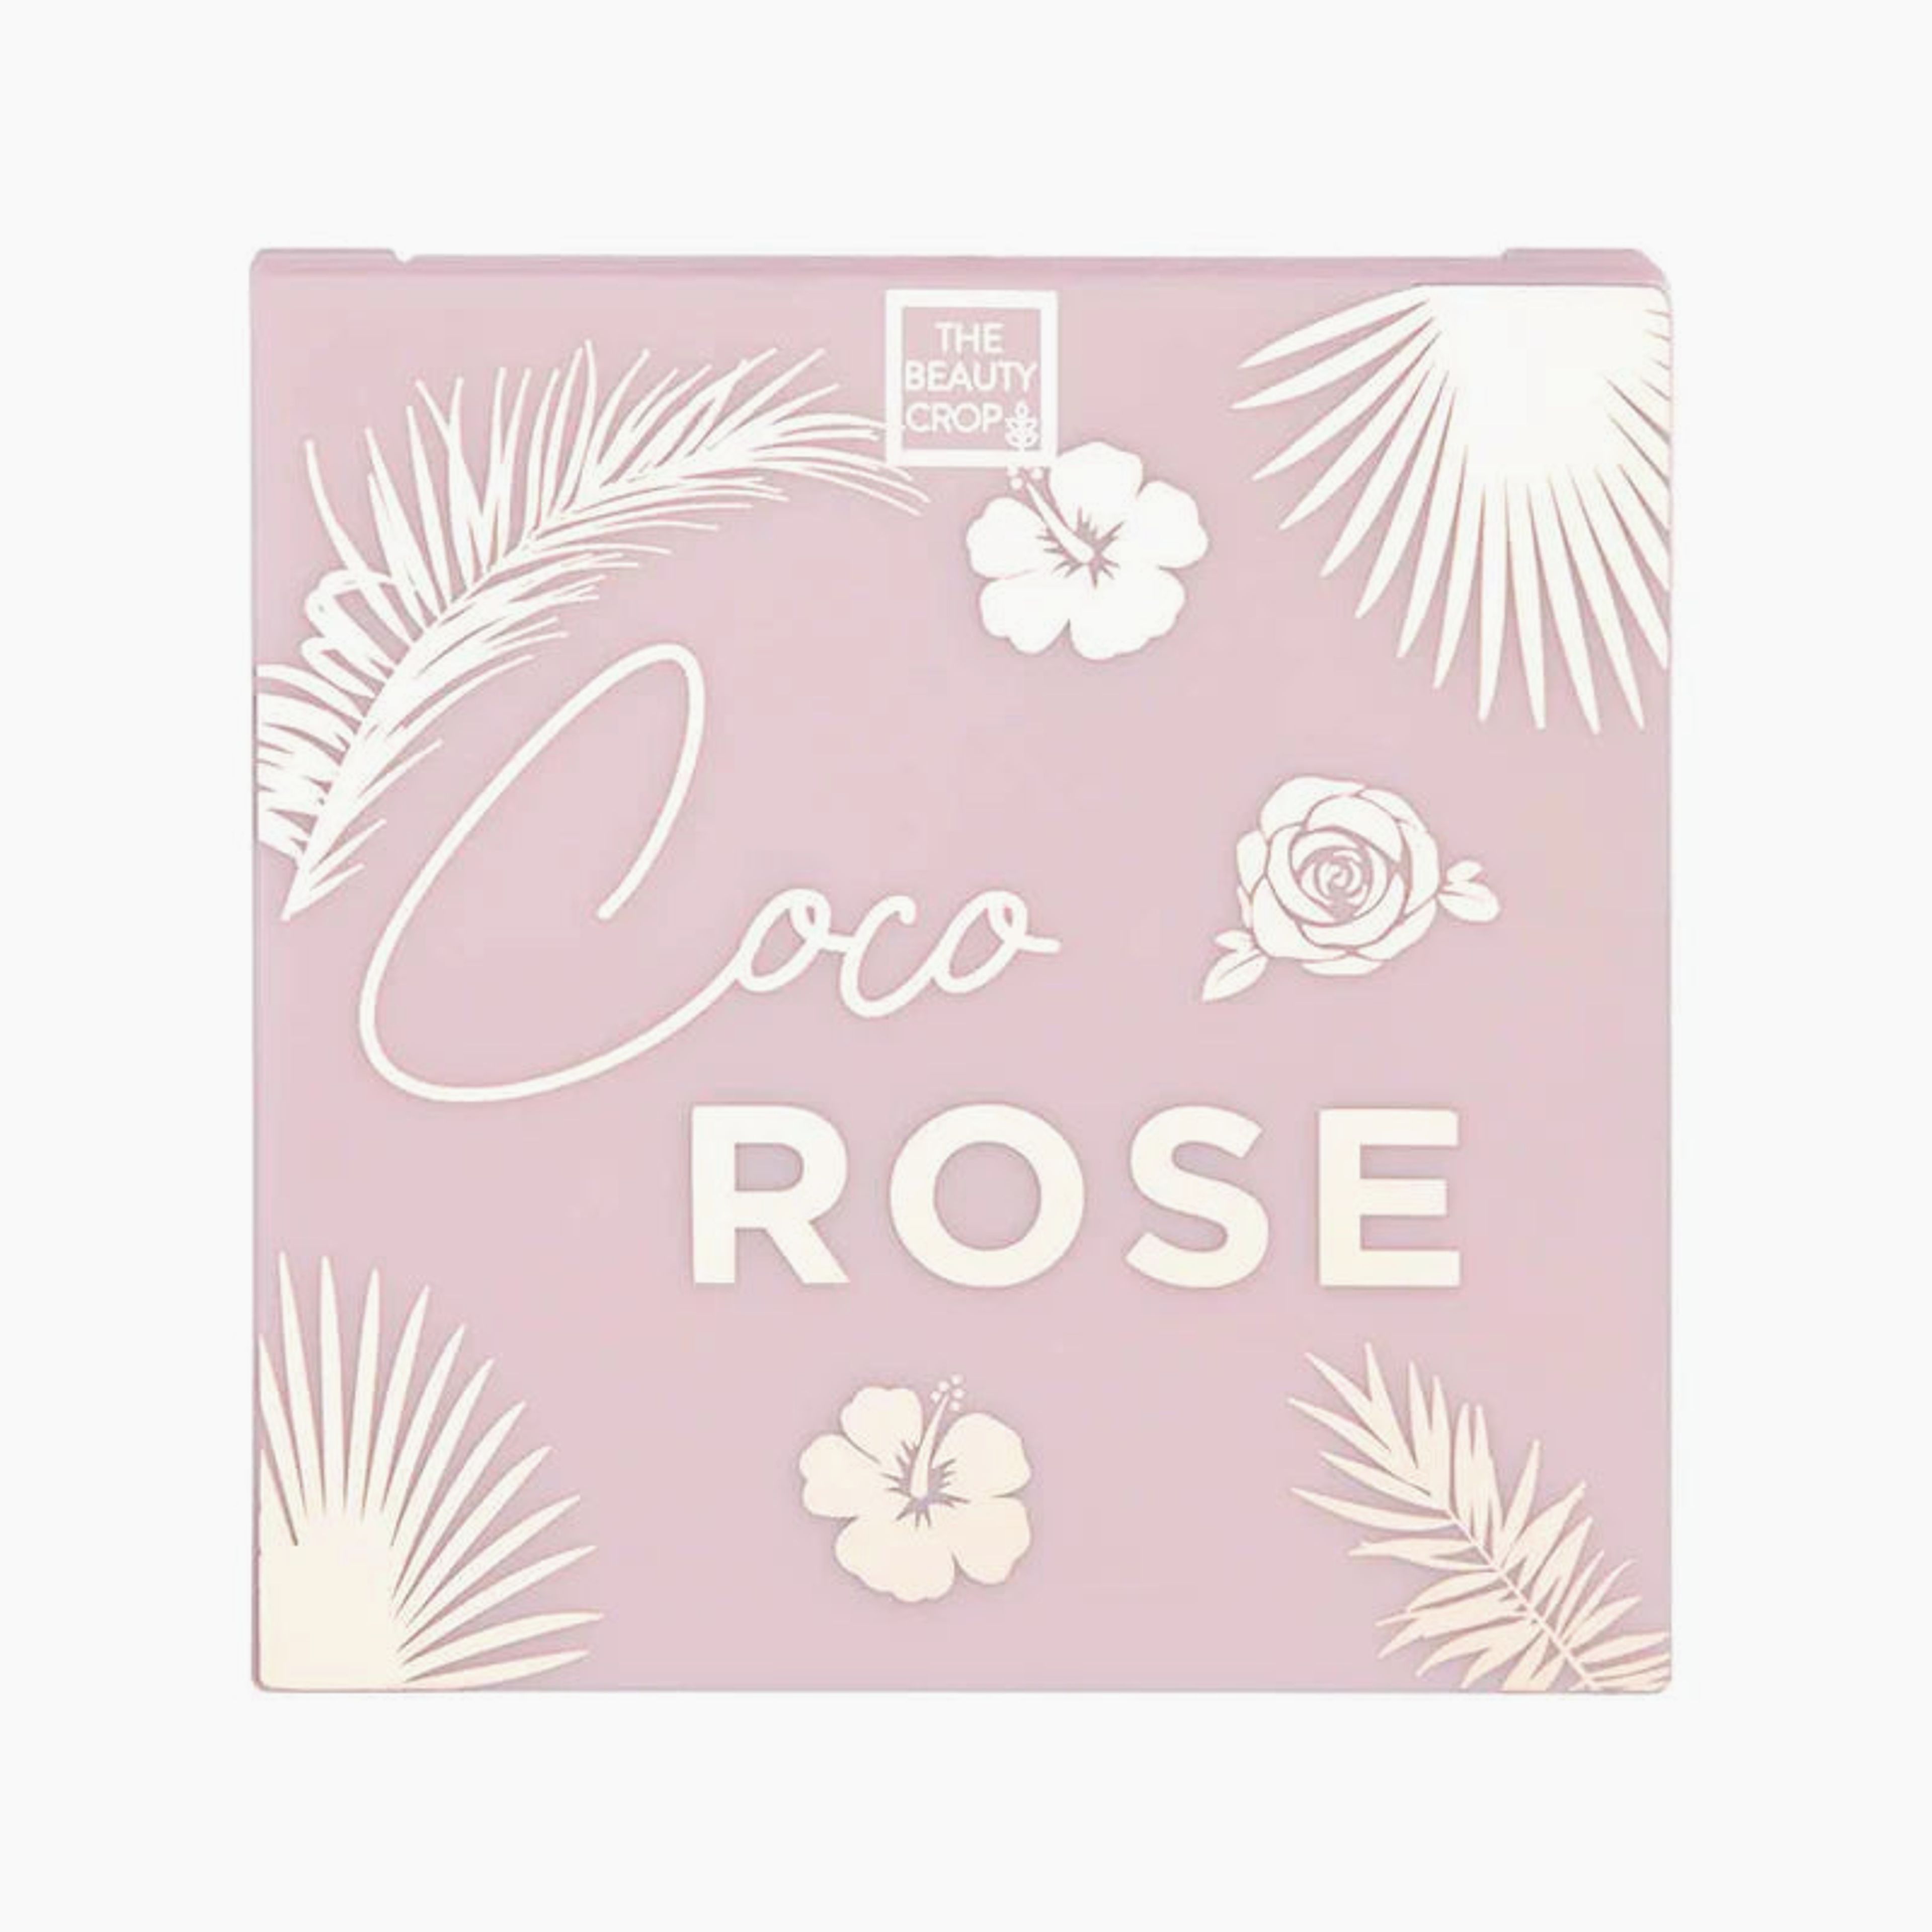 Coco Rose Face Palette